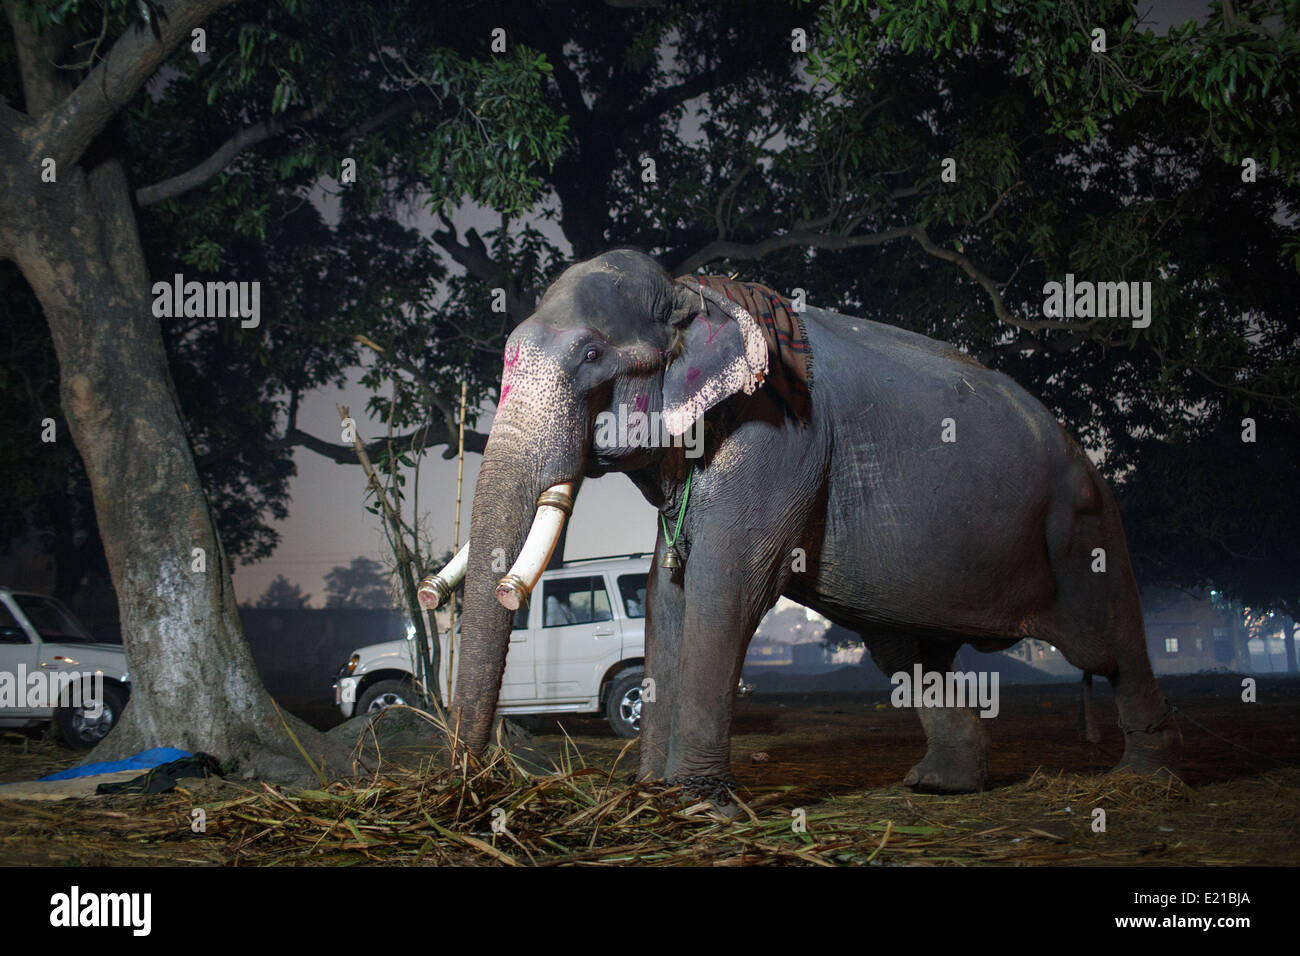 Elephants on display at night at Sonepur Mela livestock fair in Bihar, India Stock Photo